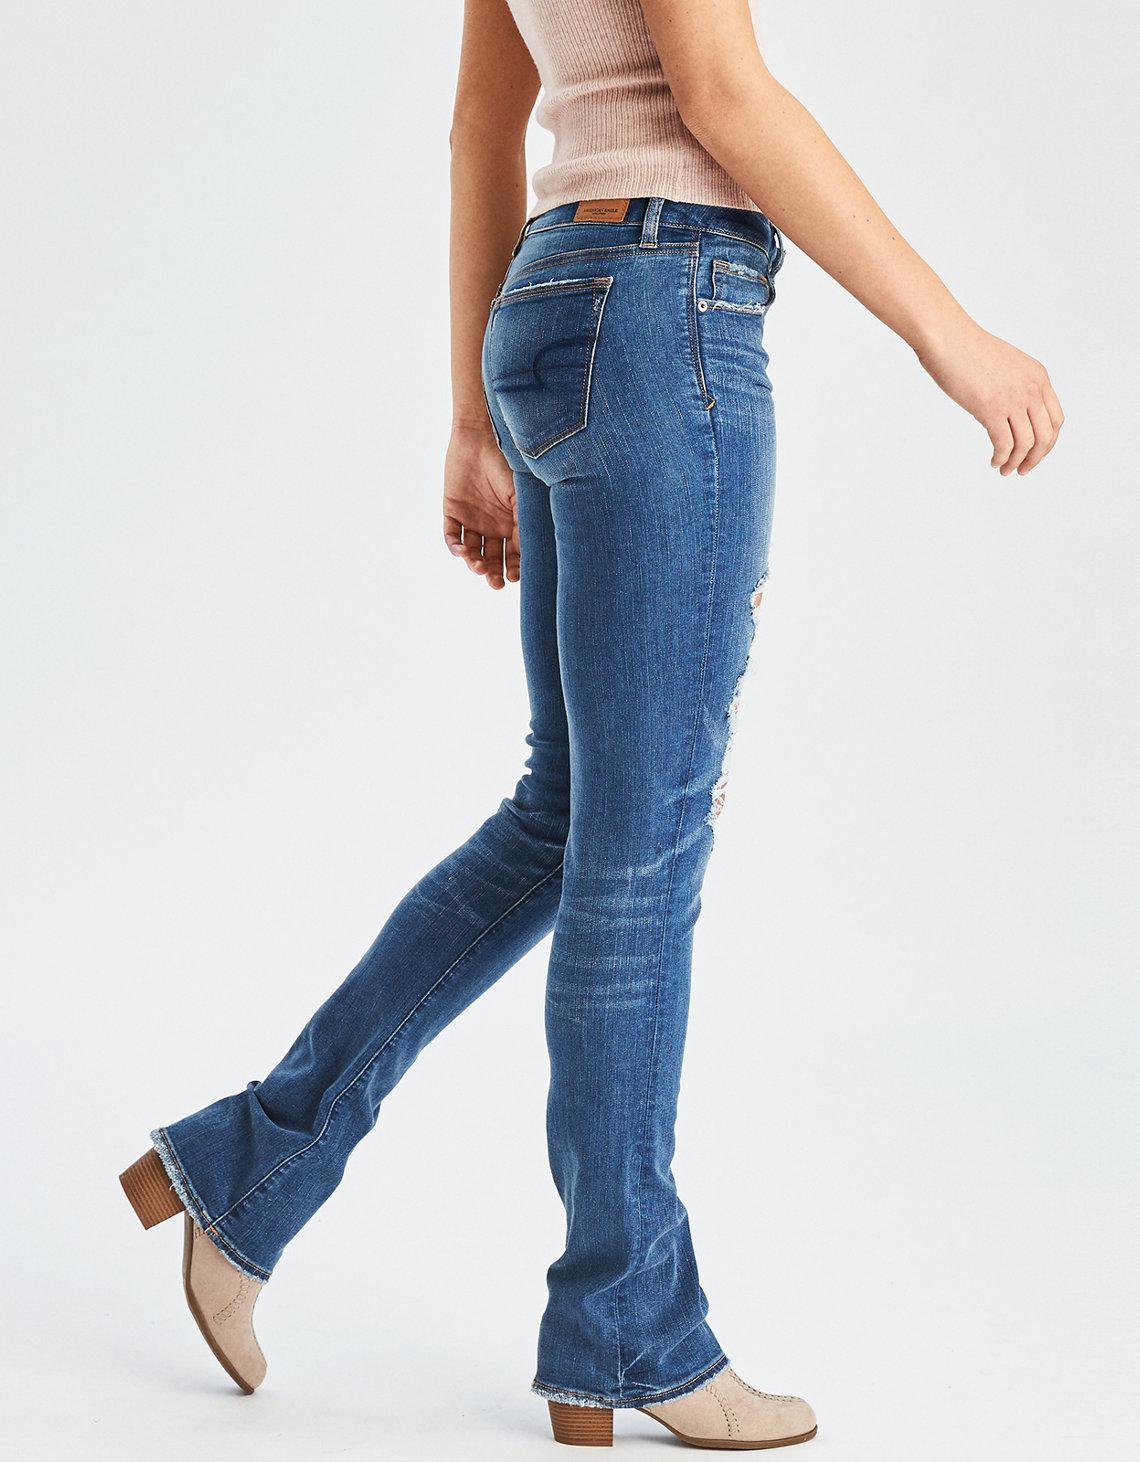 ae skinny kick jeans